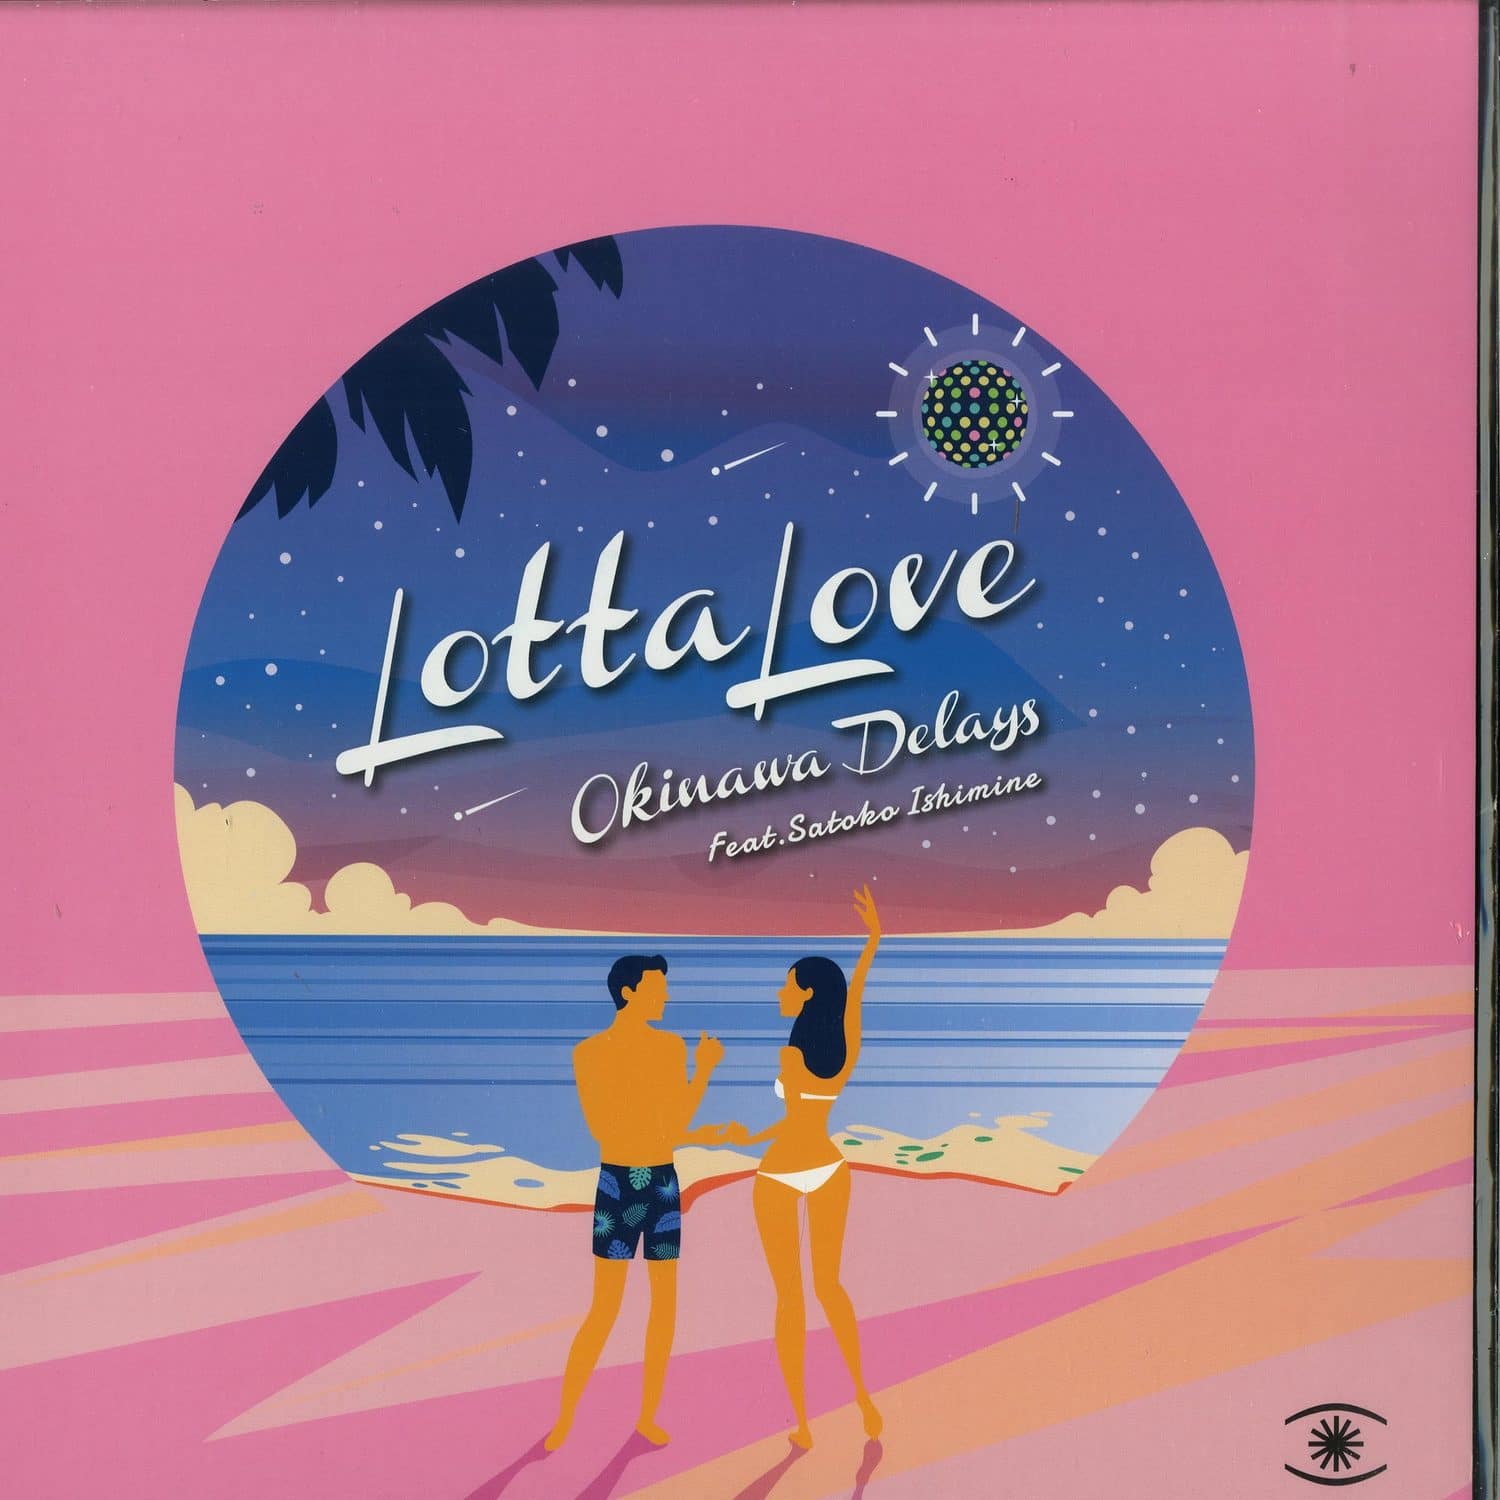 Okinawa Delays ft. Satoko Ishimine - LOTTA LOVE 